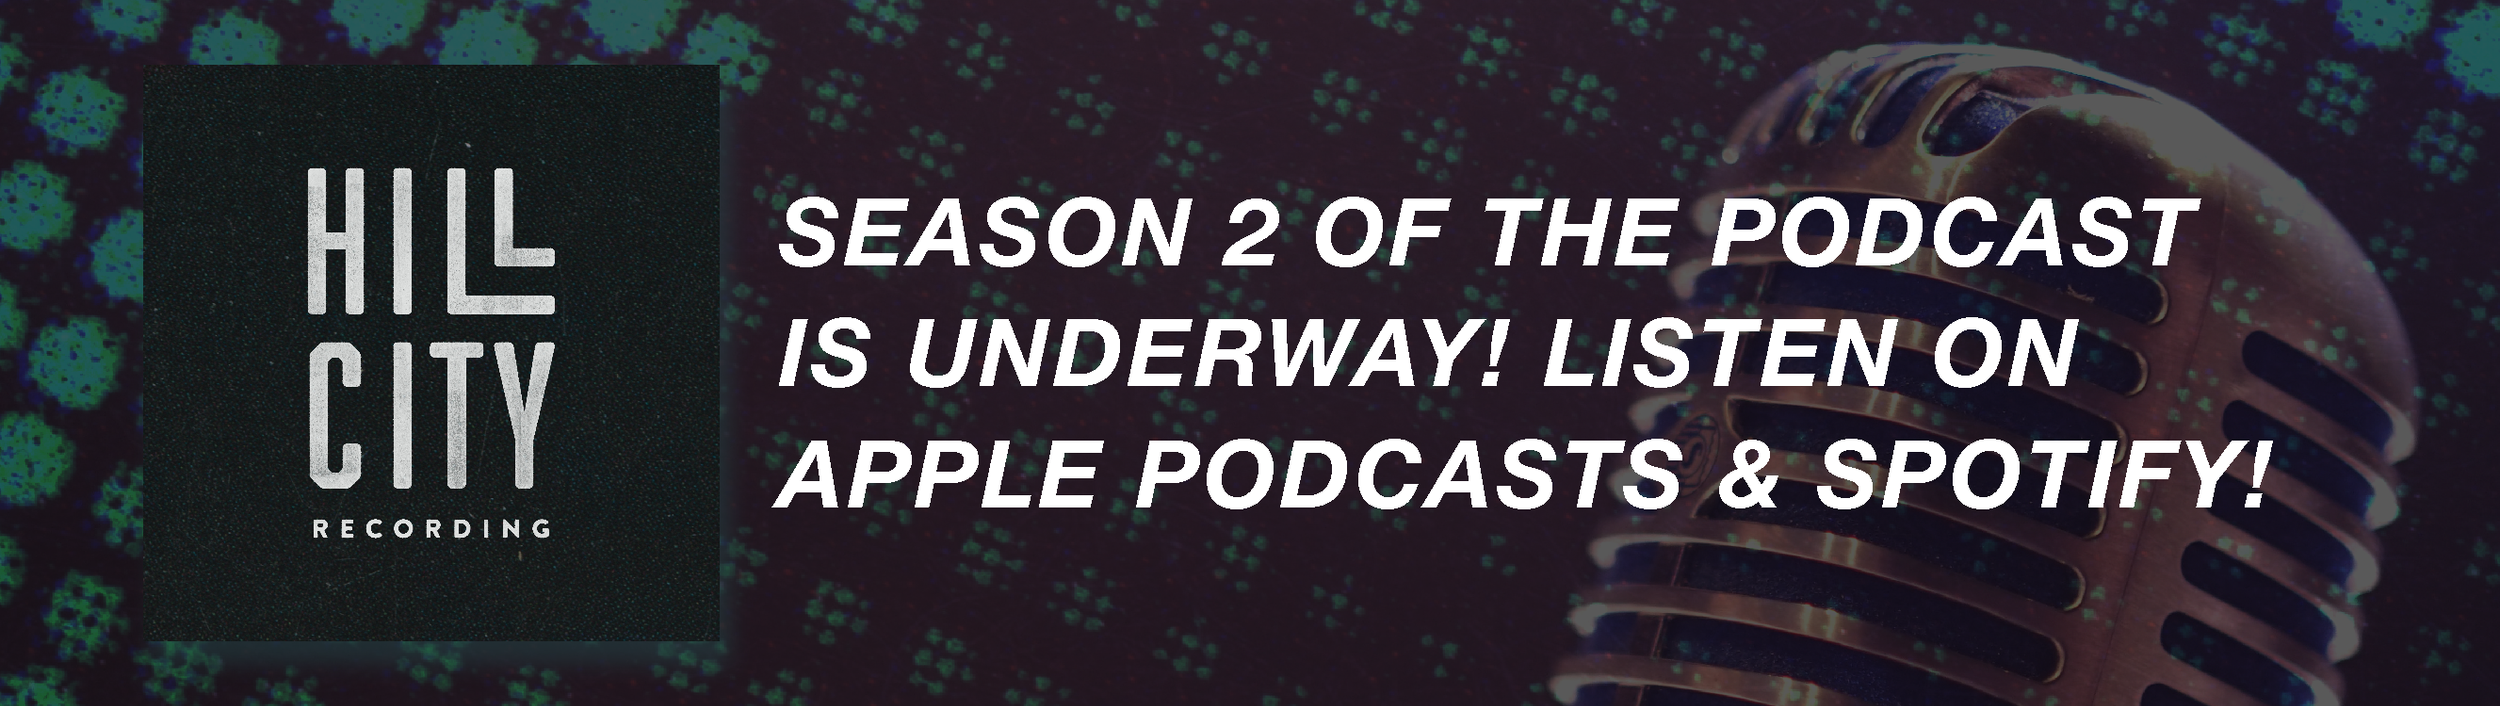 podcast season 2 copy.png